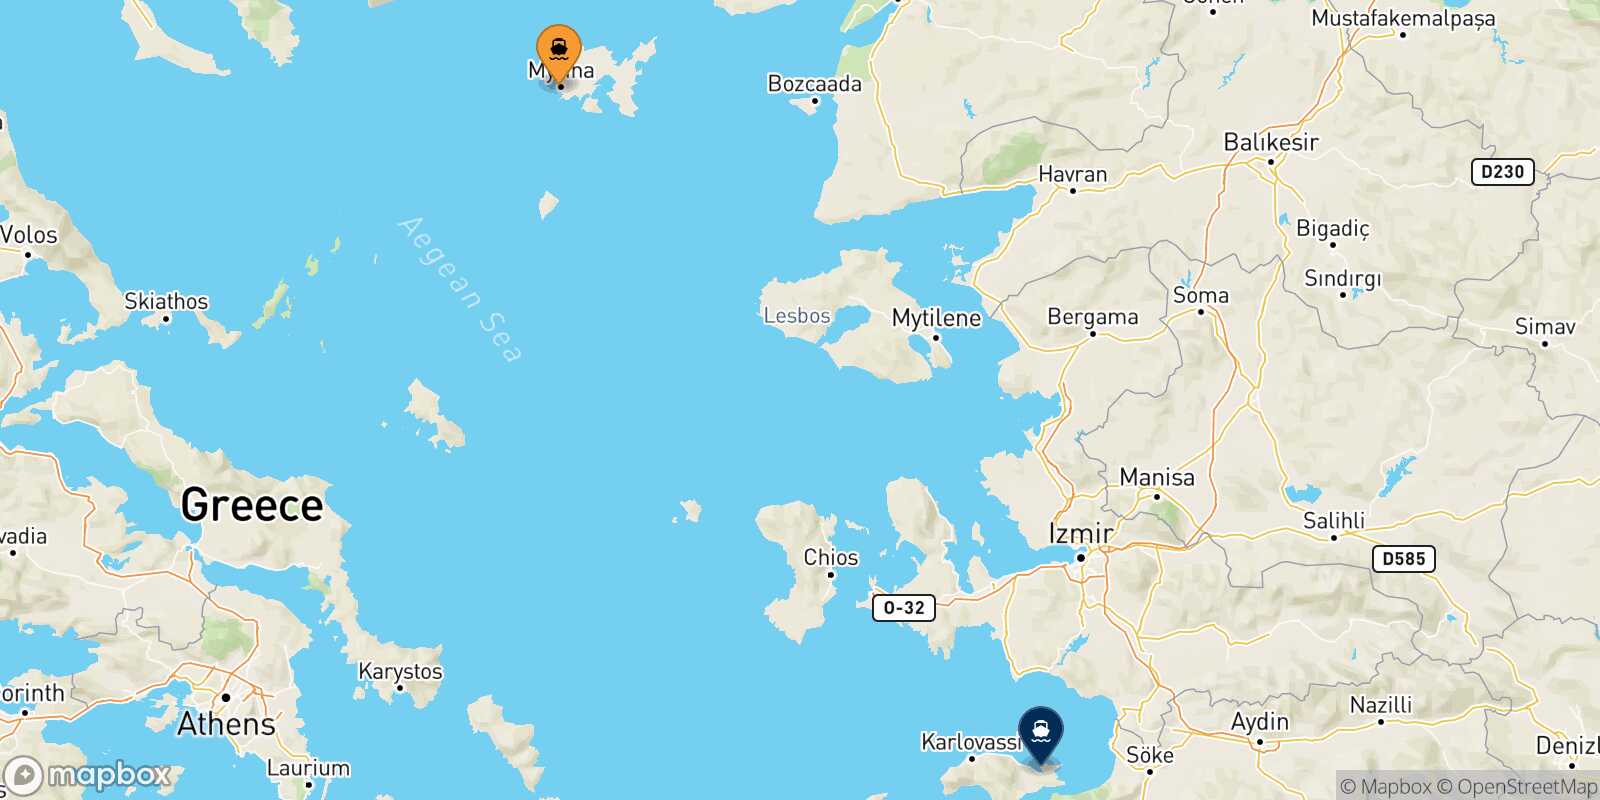 Myrina (Limnos) Vathi (Samos) route map